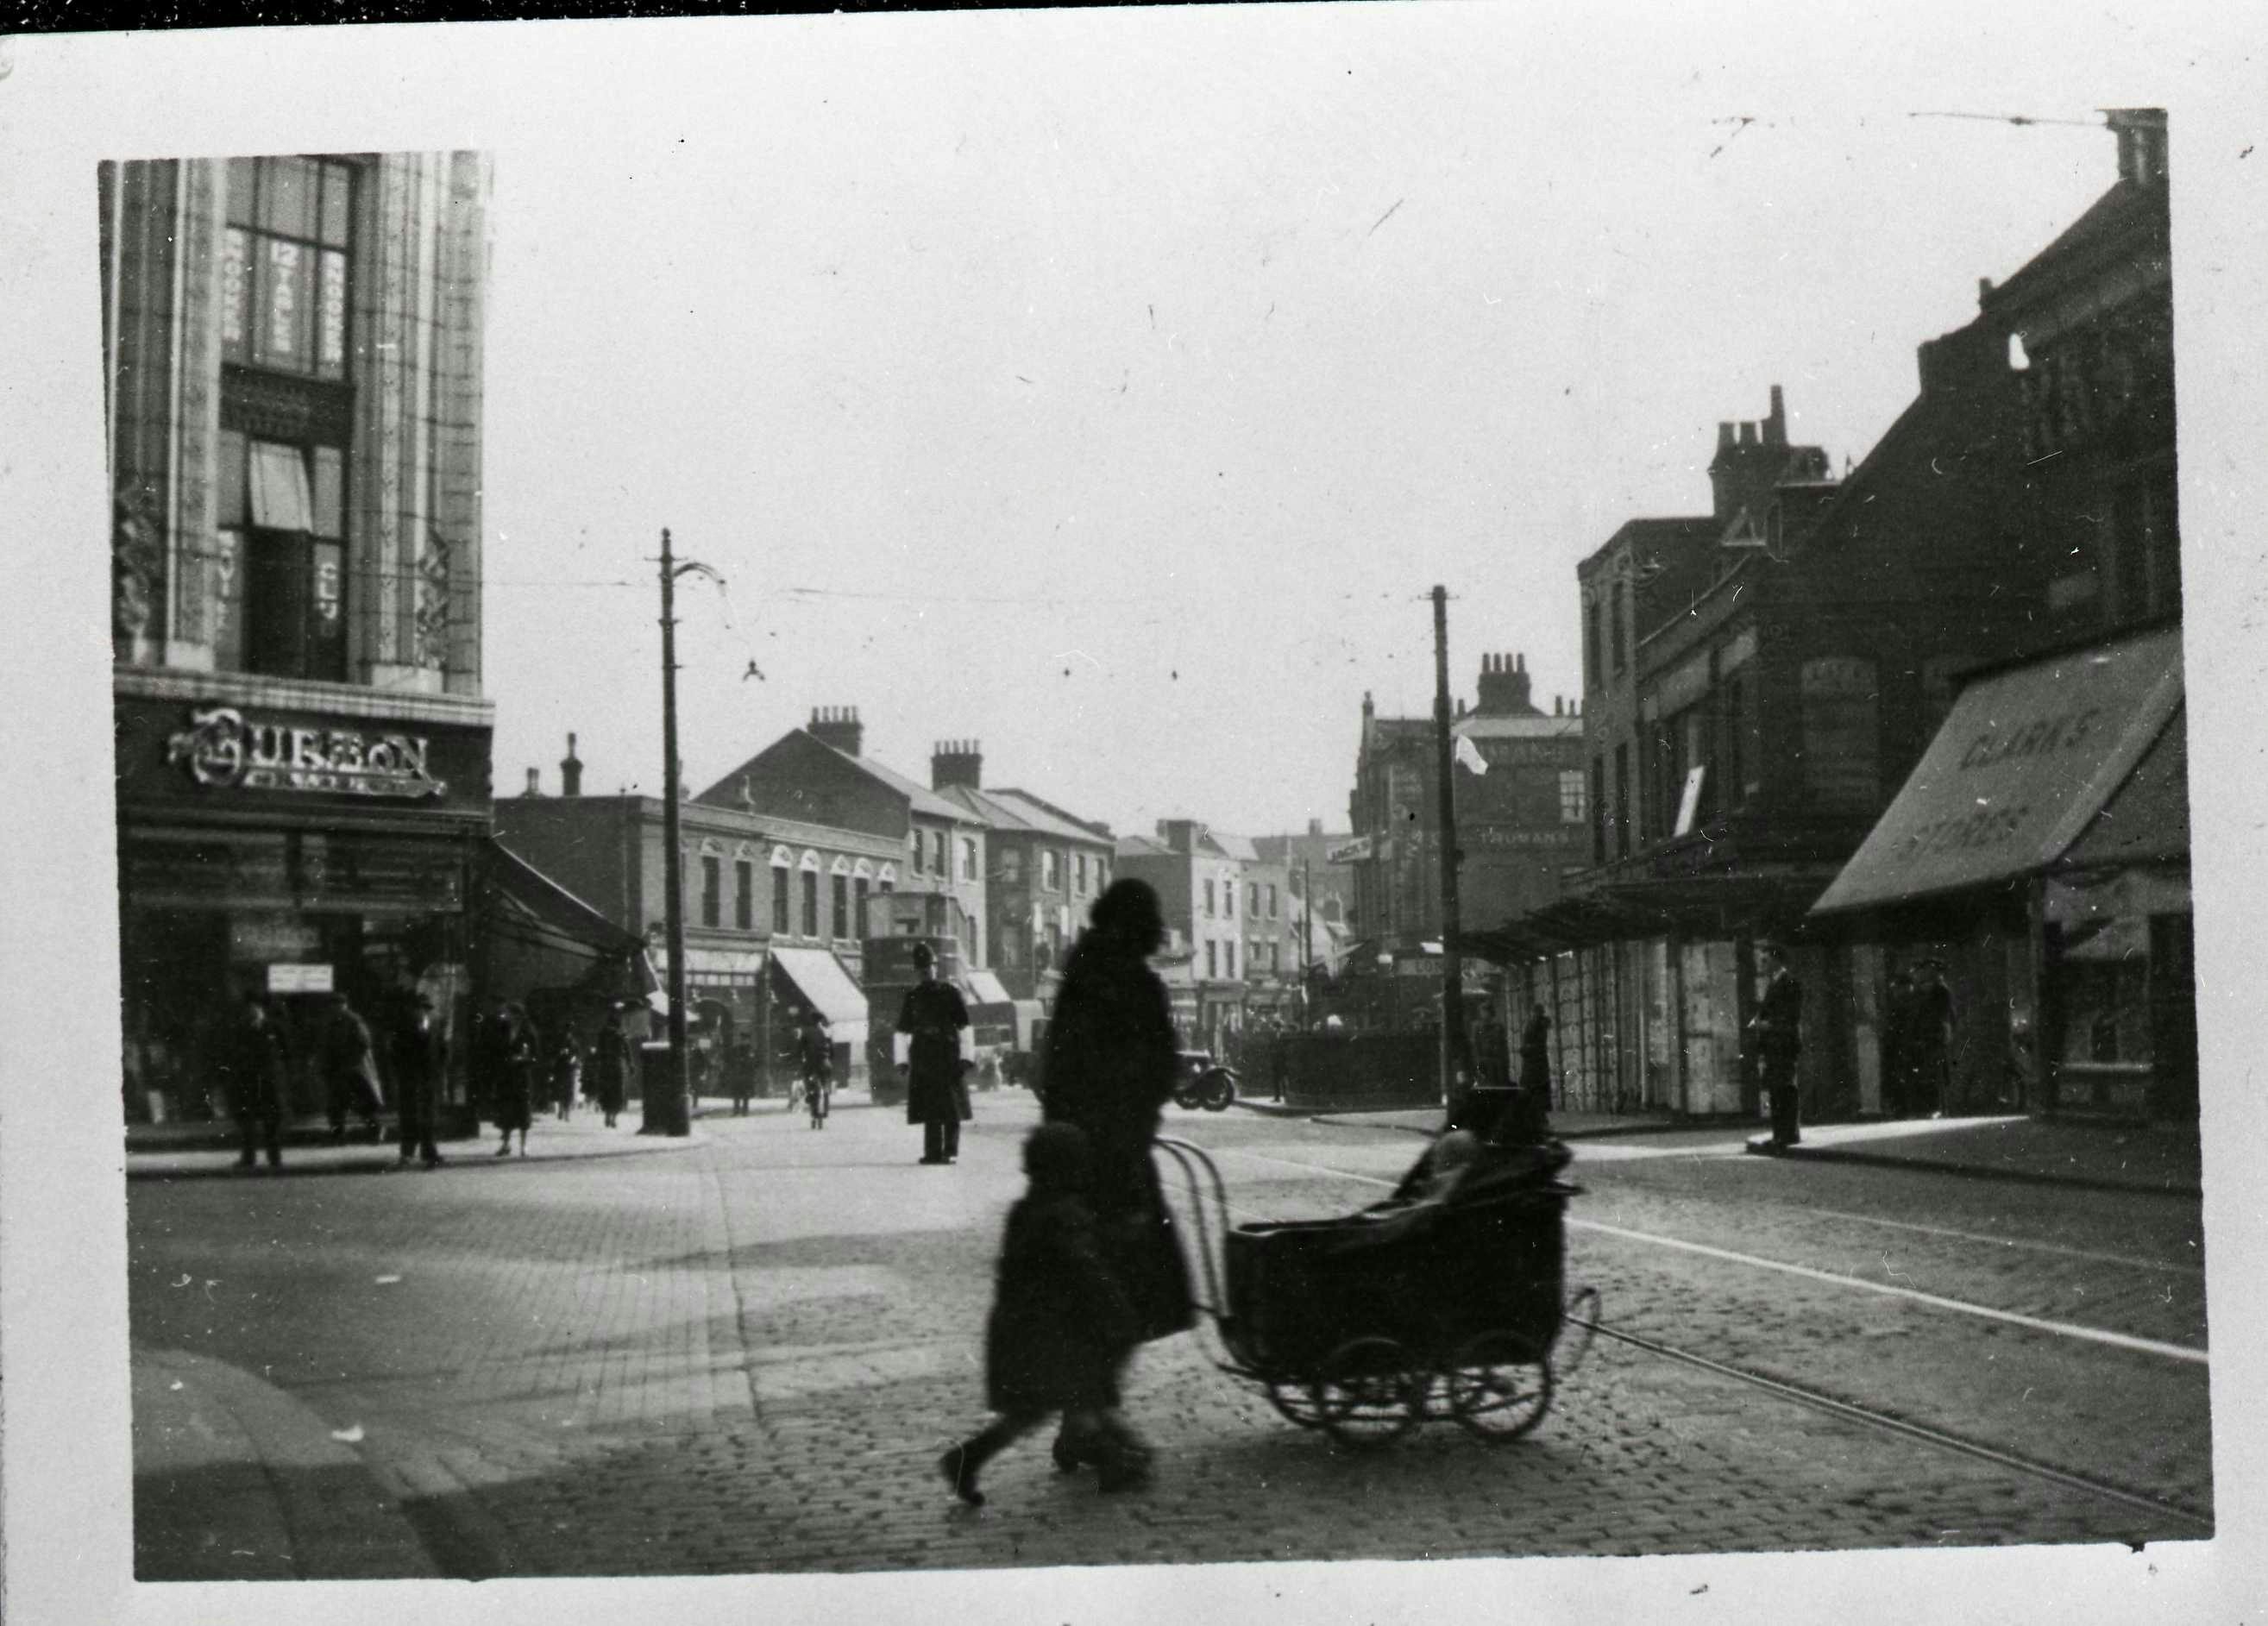 Burton corner c1935